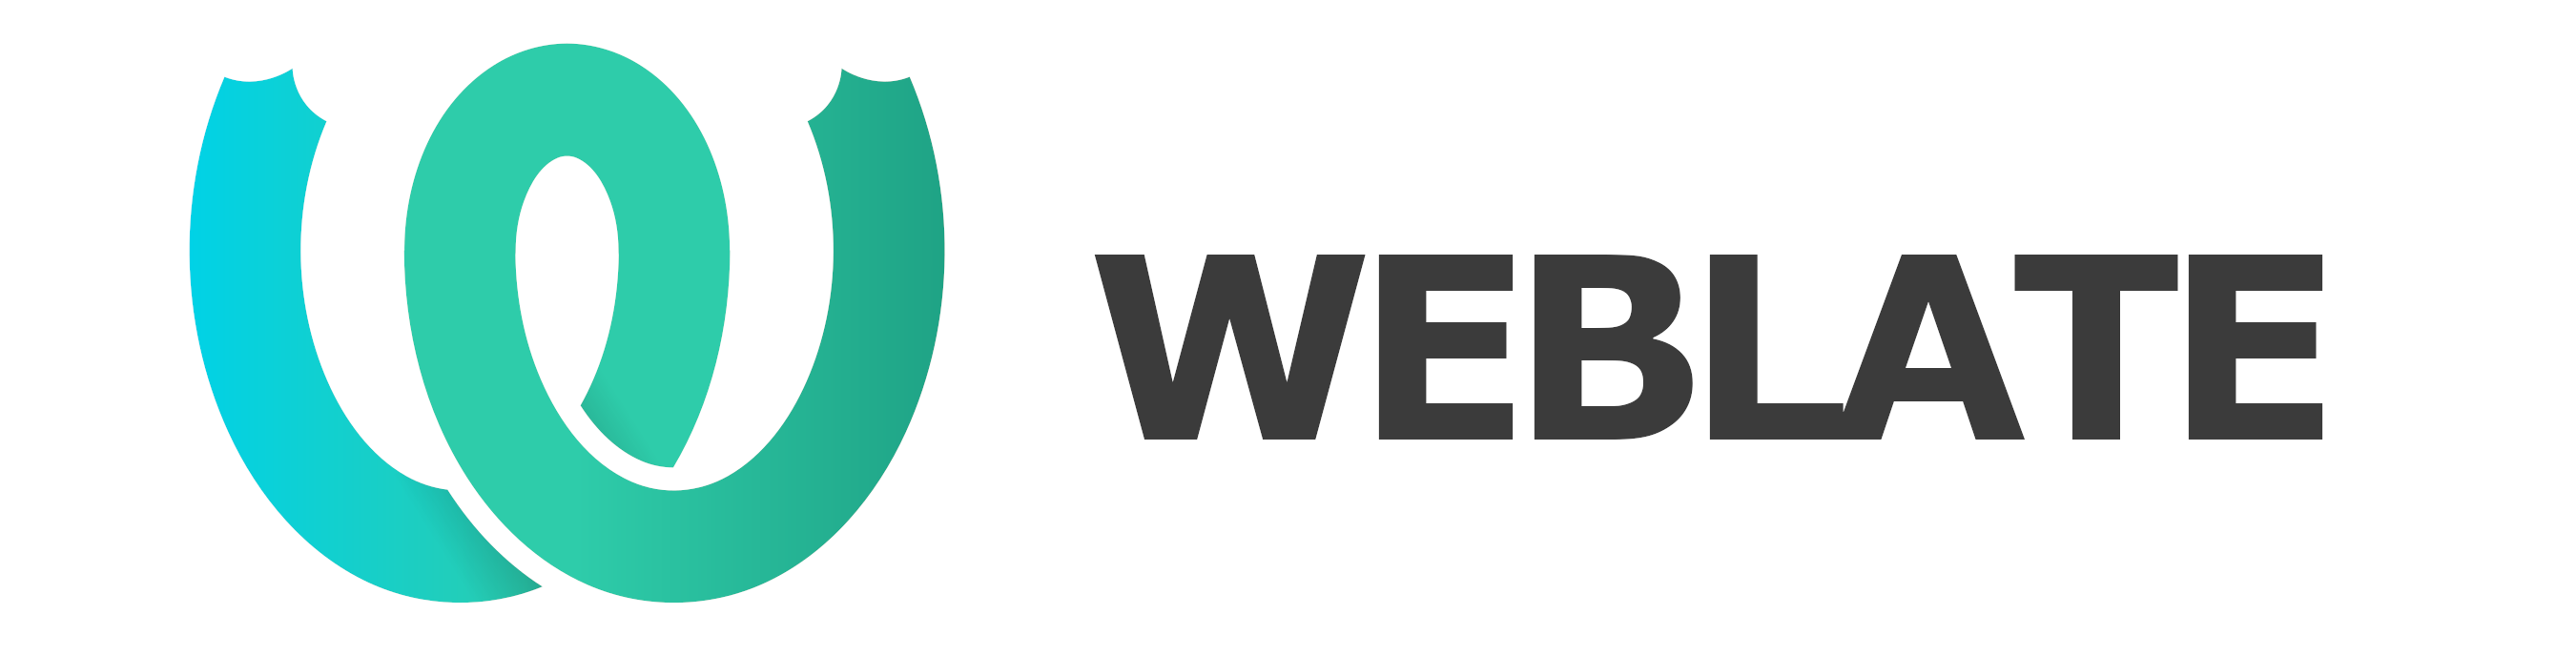 Weblate 计划于 5 月 14 日停机